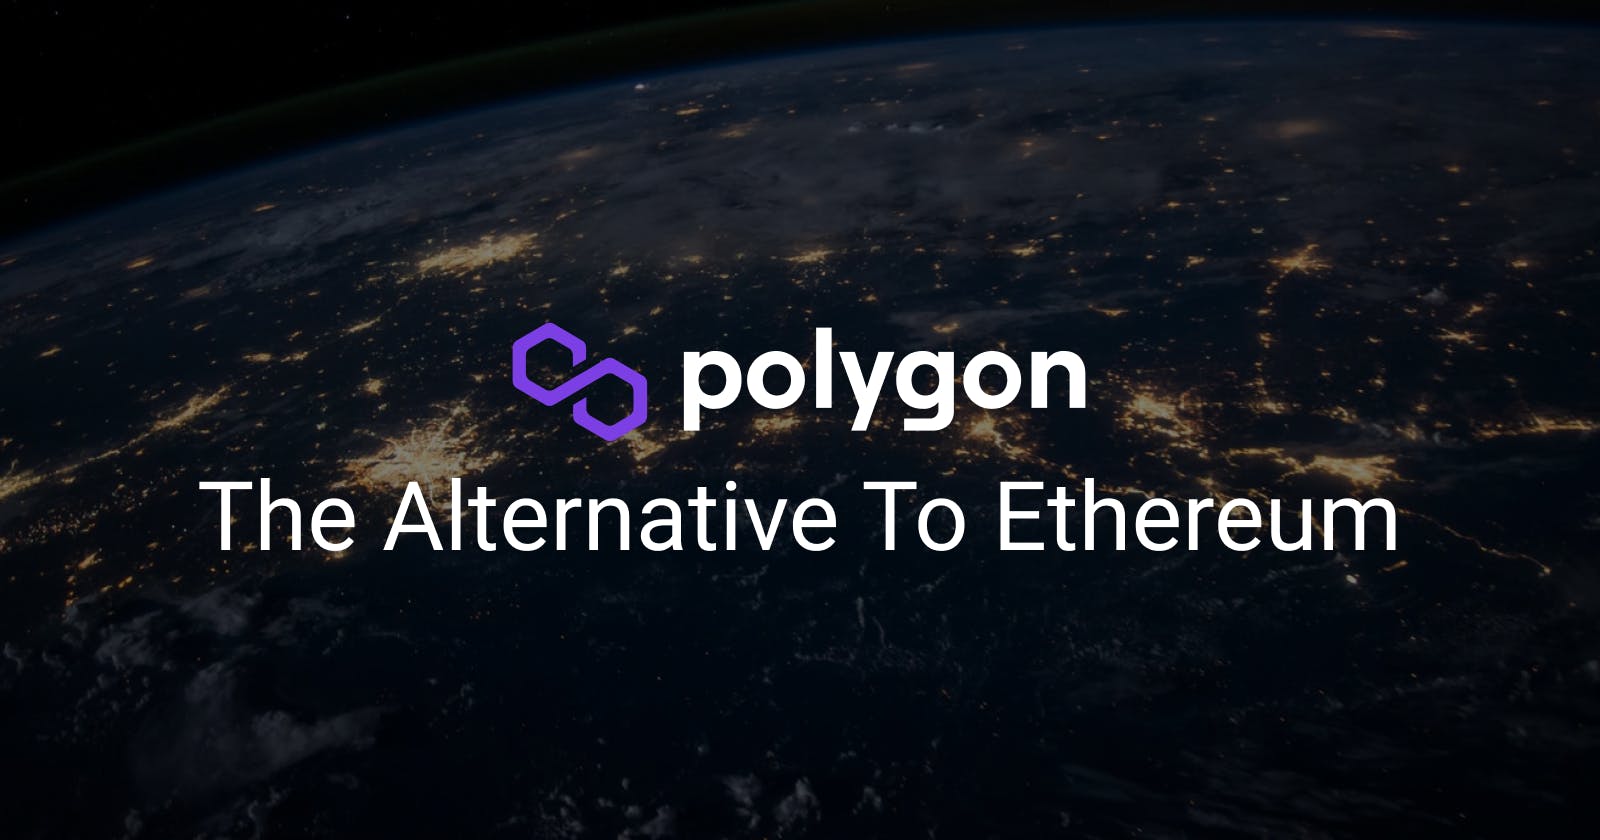 Polygon - The Alternative To Ethereum